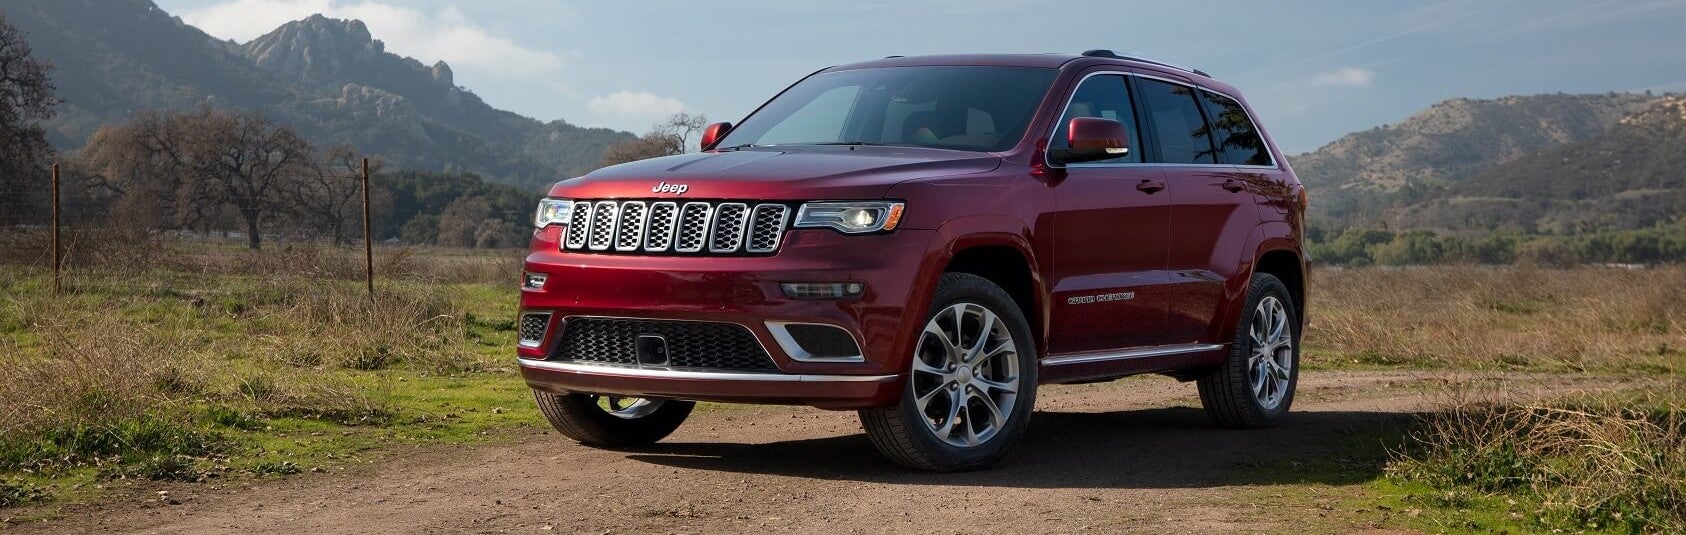 Jeep Grand Cherokee Lease Deals Livonia MI 